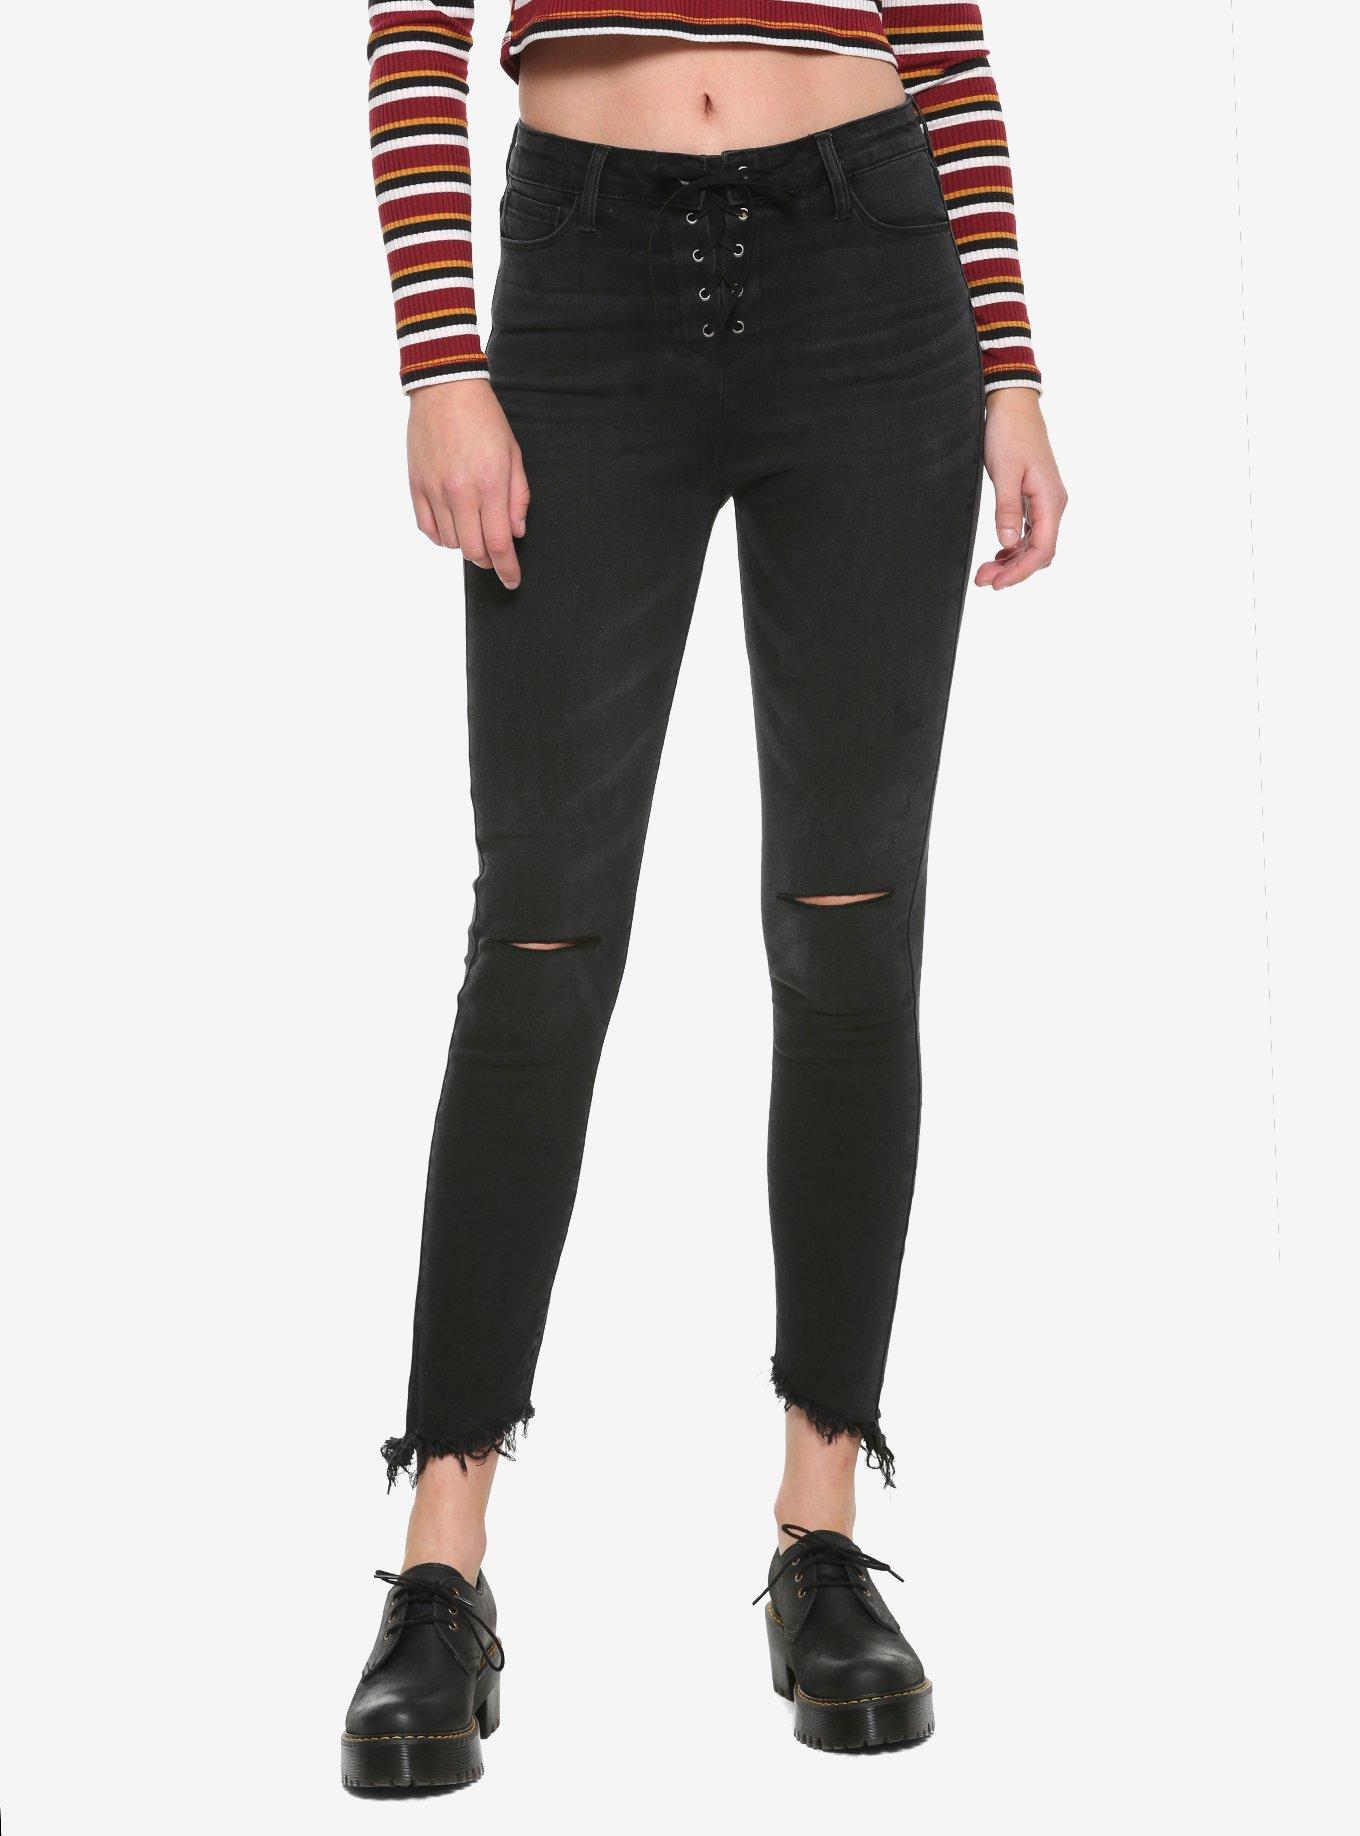 Black Lace-Up Front Distressed Skinny Jeans, BLACK, hi-res